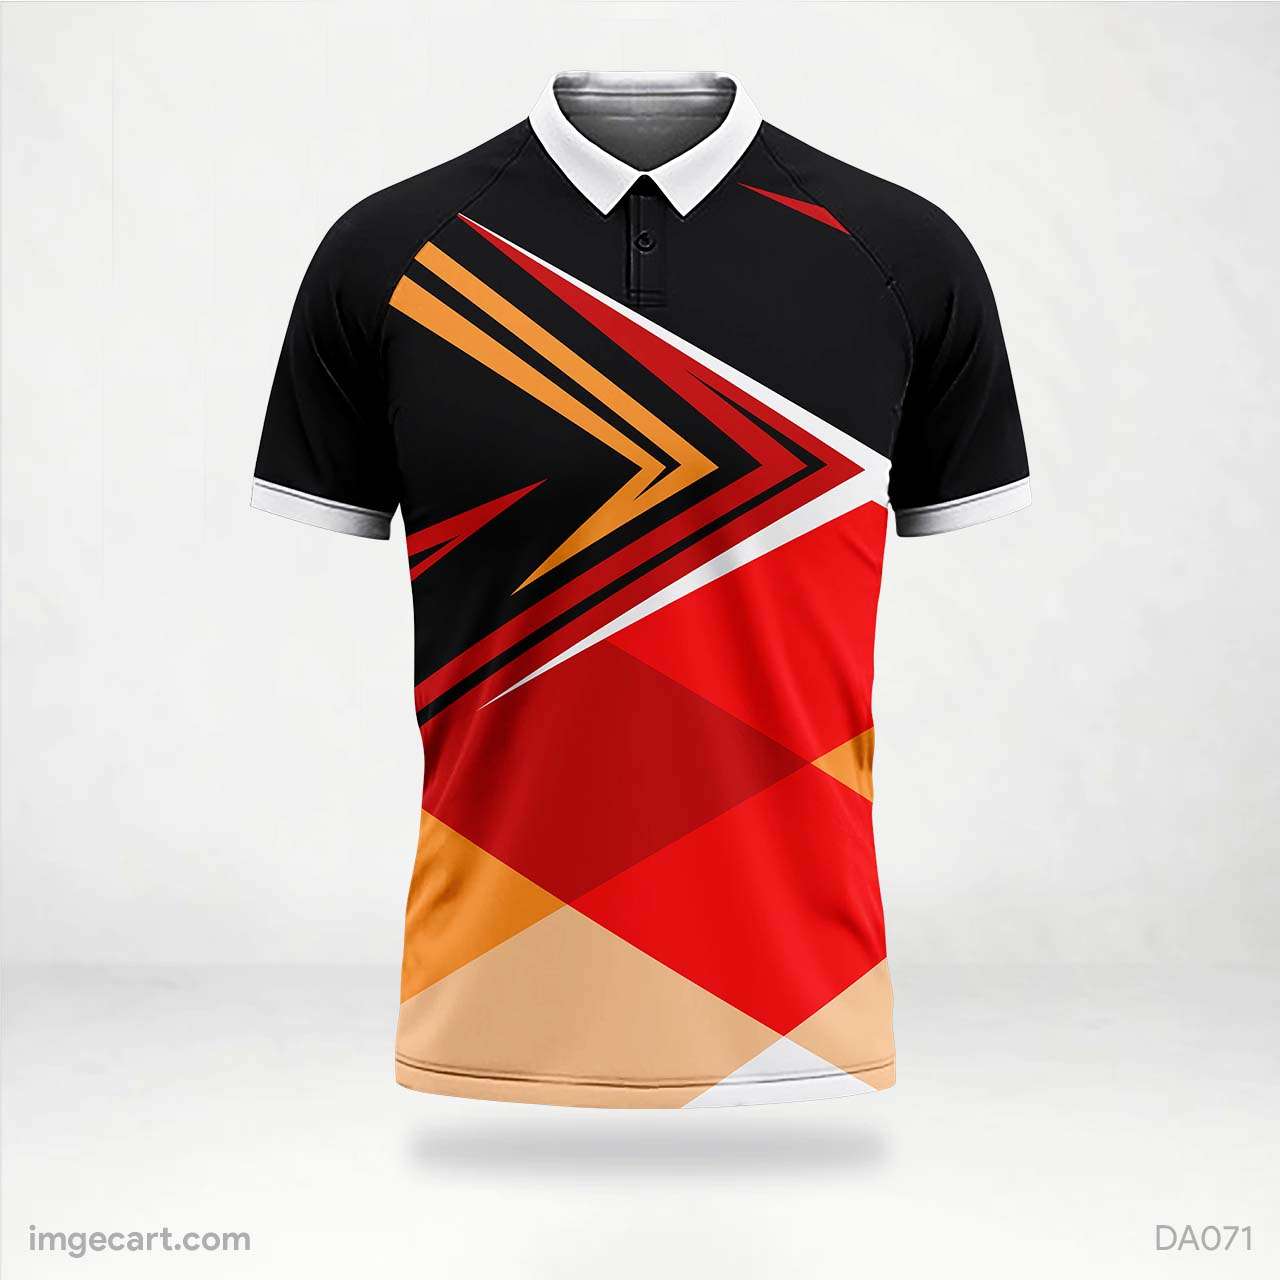 Cricket Jersey Design Black with Orange and Red - imgecart